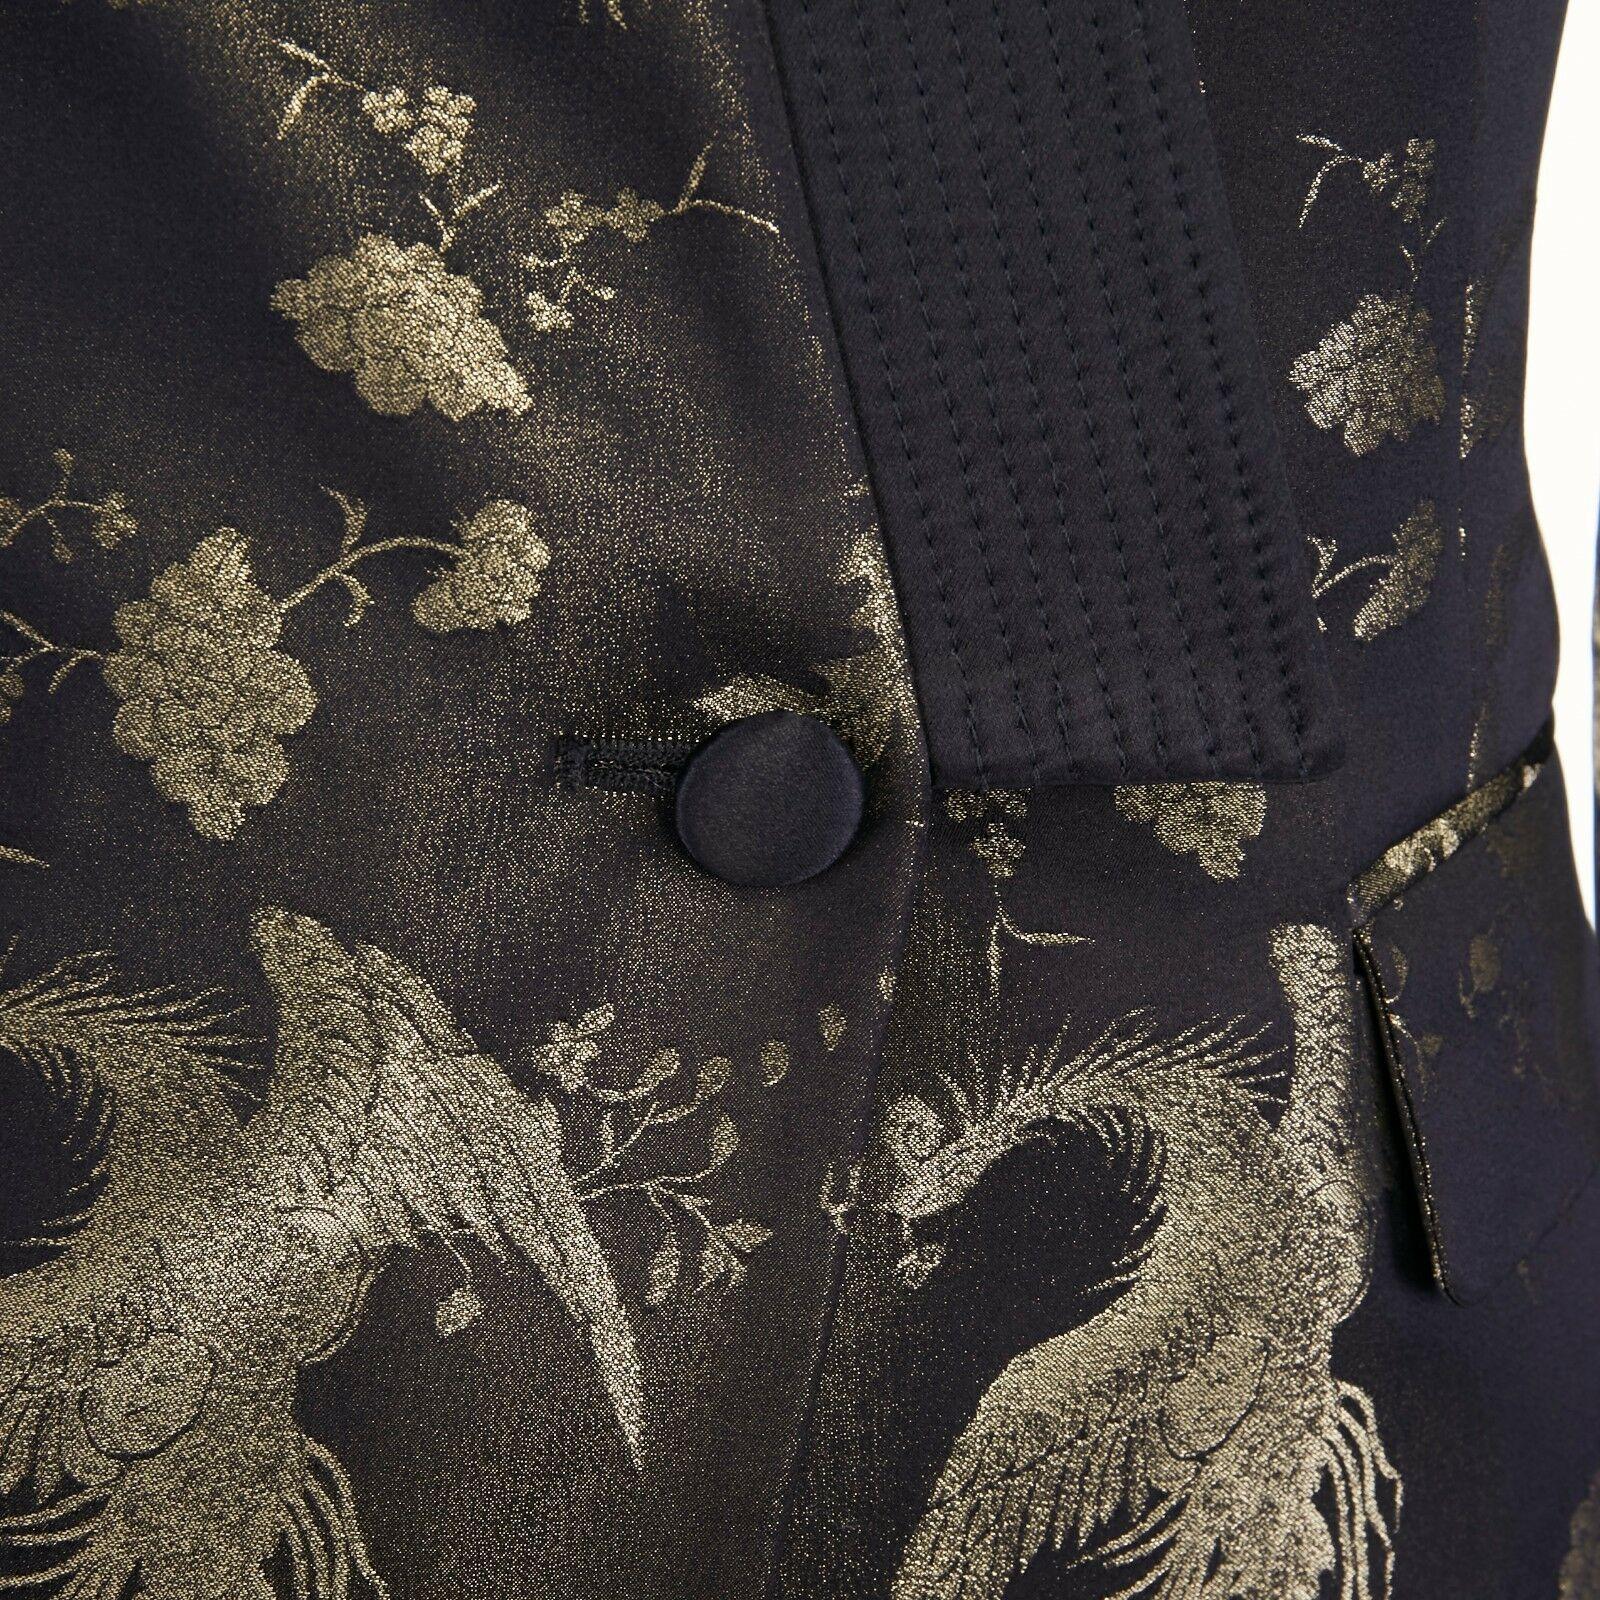 new ROBERTO CAVALLI oriental gold phoebix jacquard kimono collar blazer jacket S
ROBERTO CAVALLI
Viscose, metallic, silk, rayon, polyester. 
Gold oriental phoenix and blossom jacaurd . 
Black kimono stitched collar . 
Single button front closure .